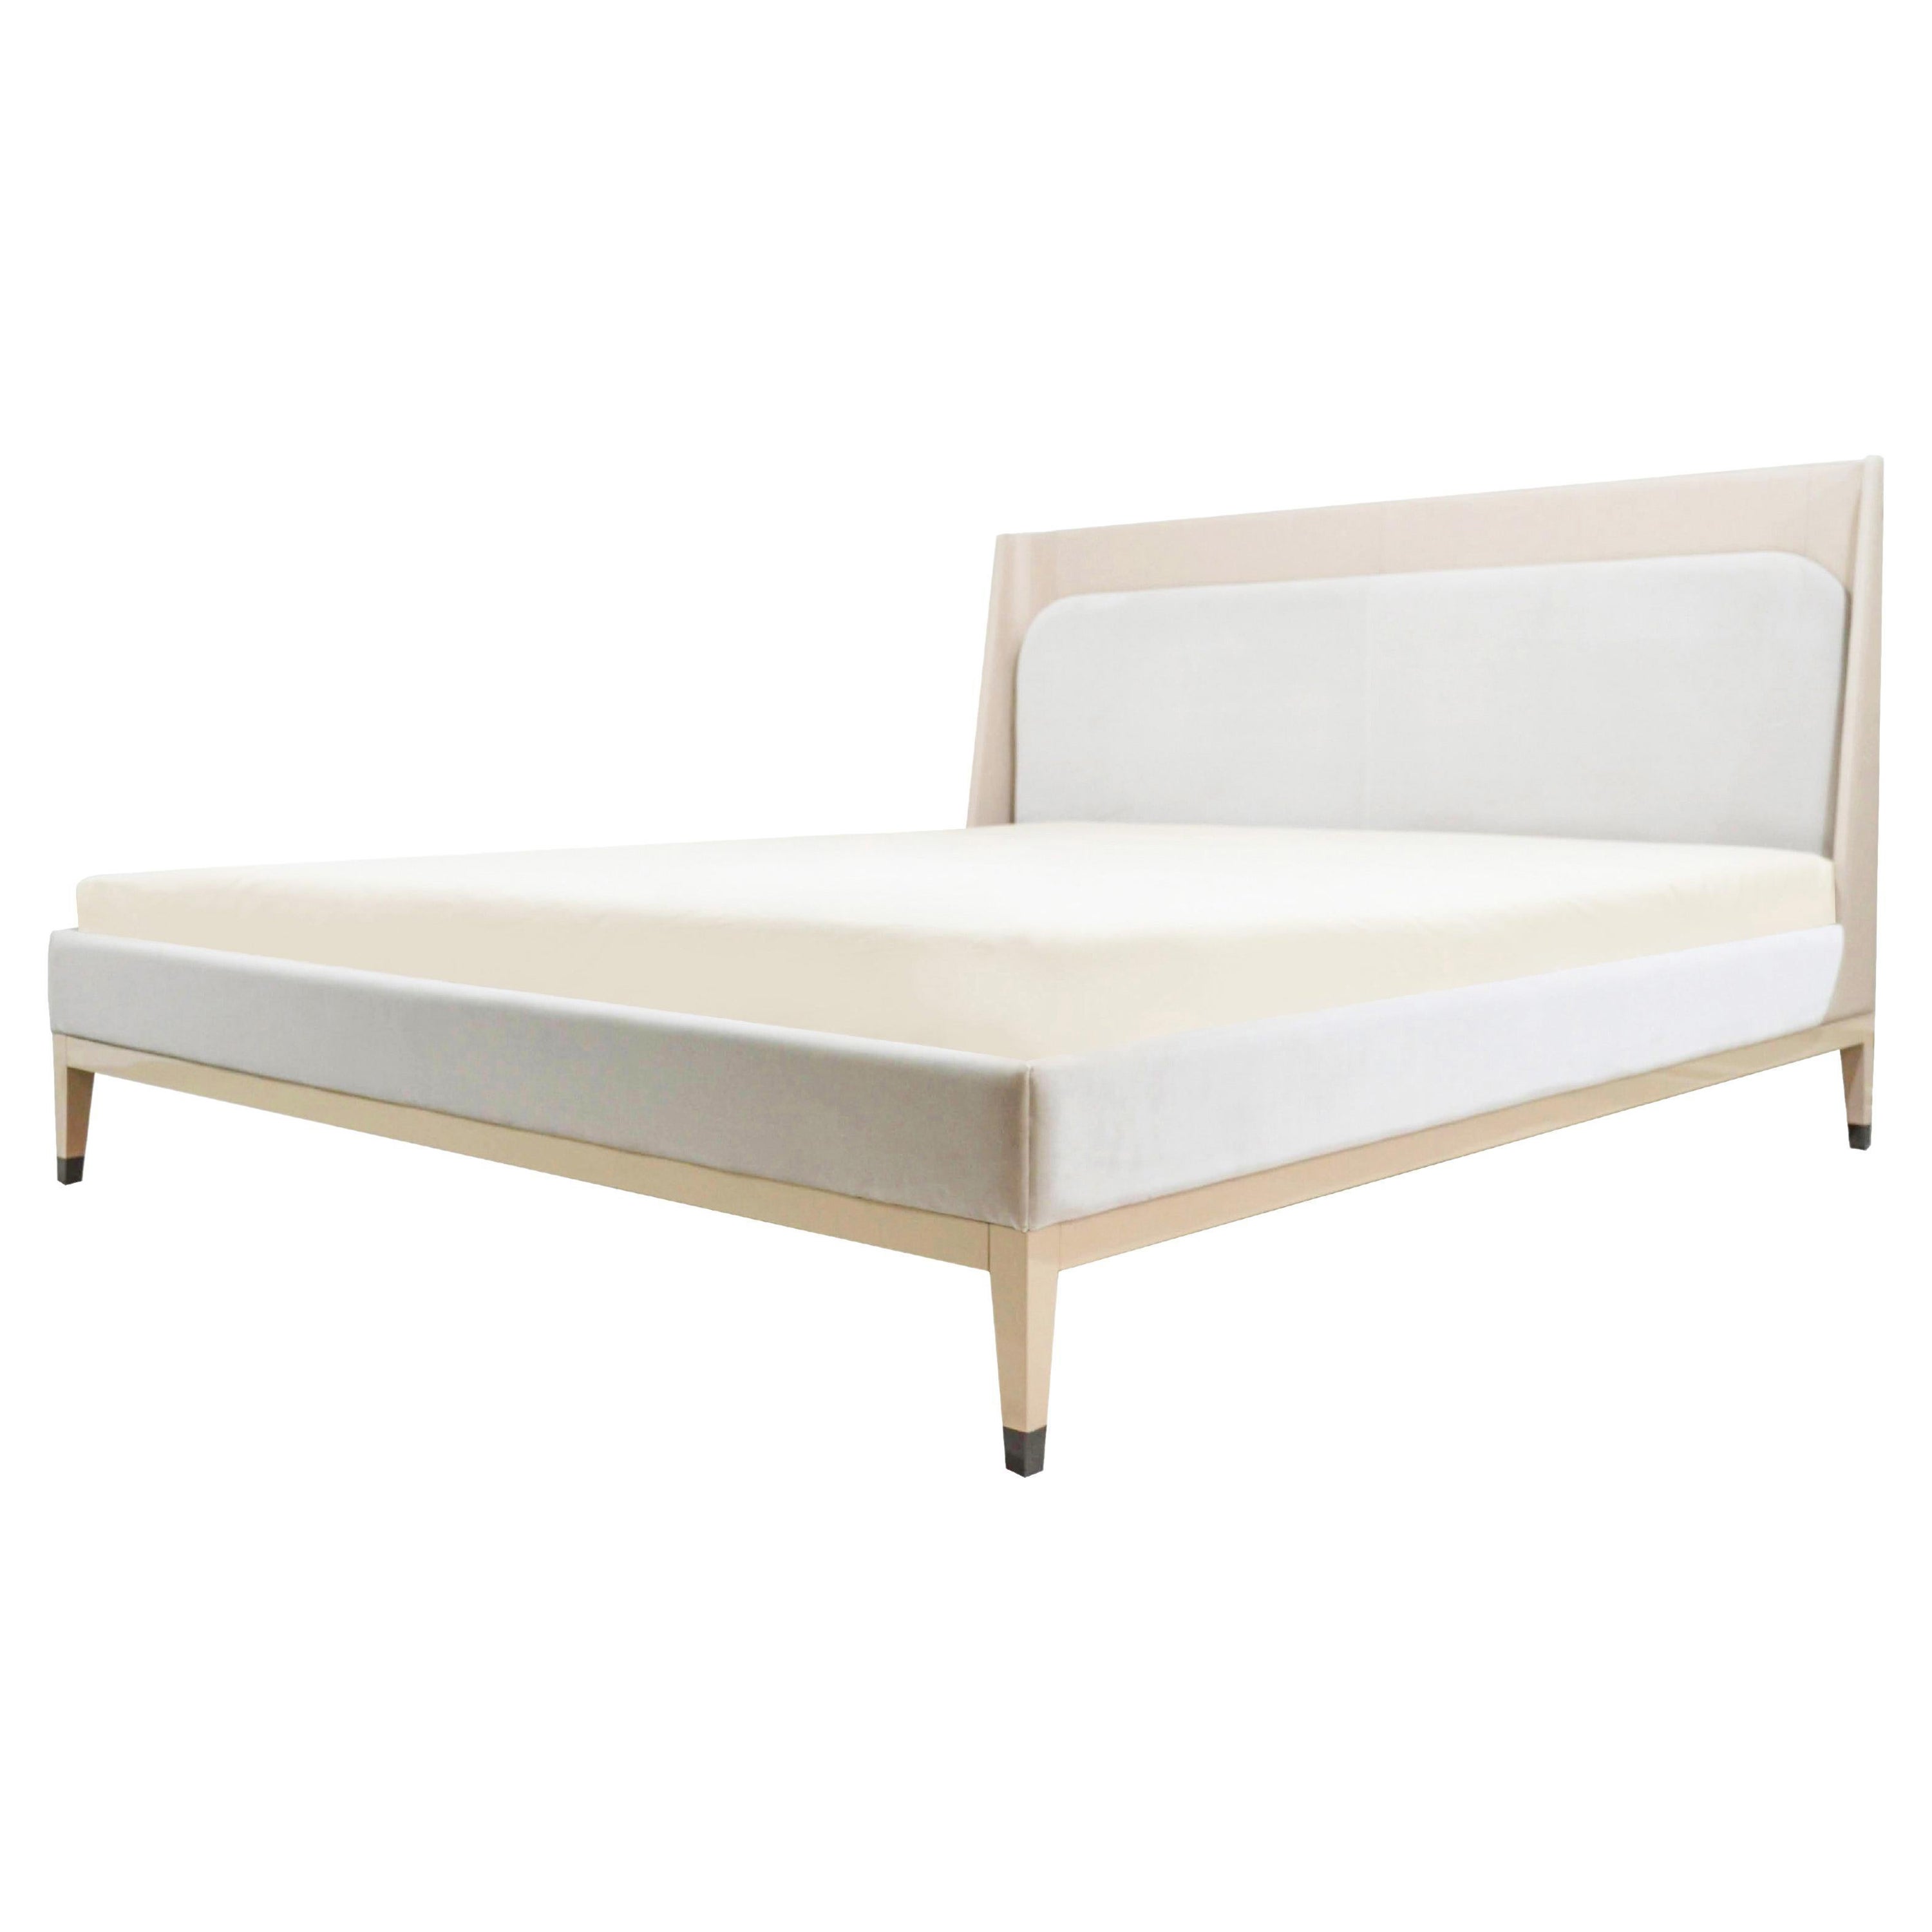 Super King Size Italian Bed Upholstered Nubuck and Velvet with Wooden Legs